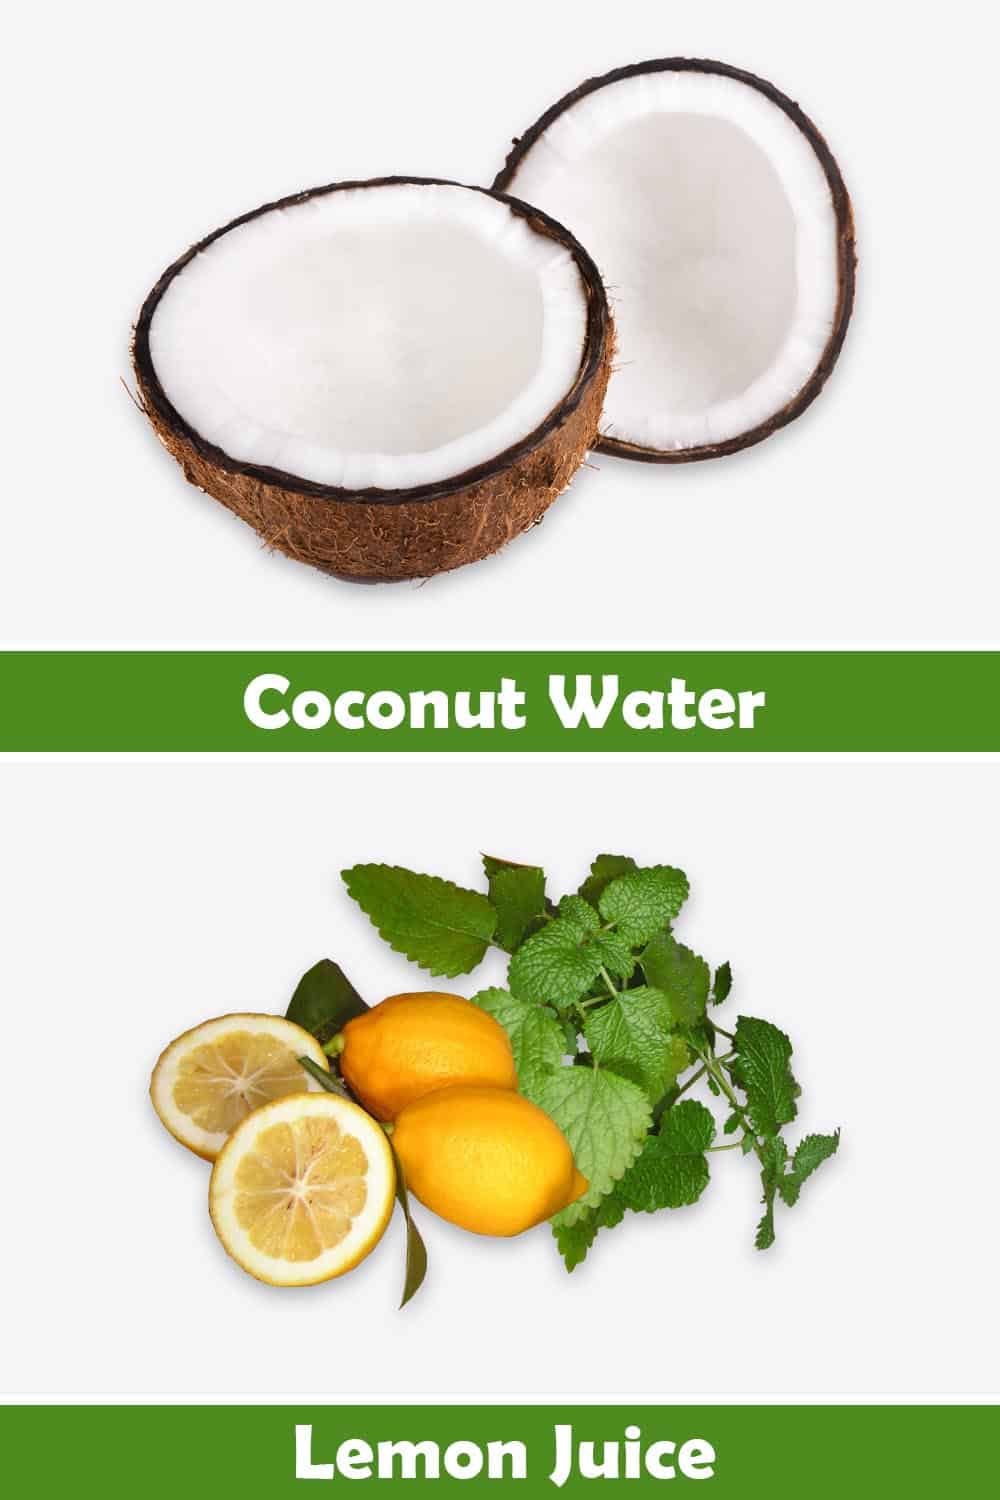 COCONUT WATER AND LEMON JUICE